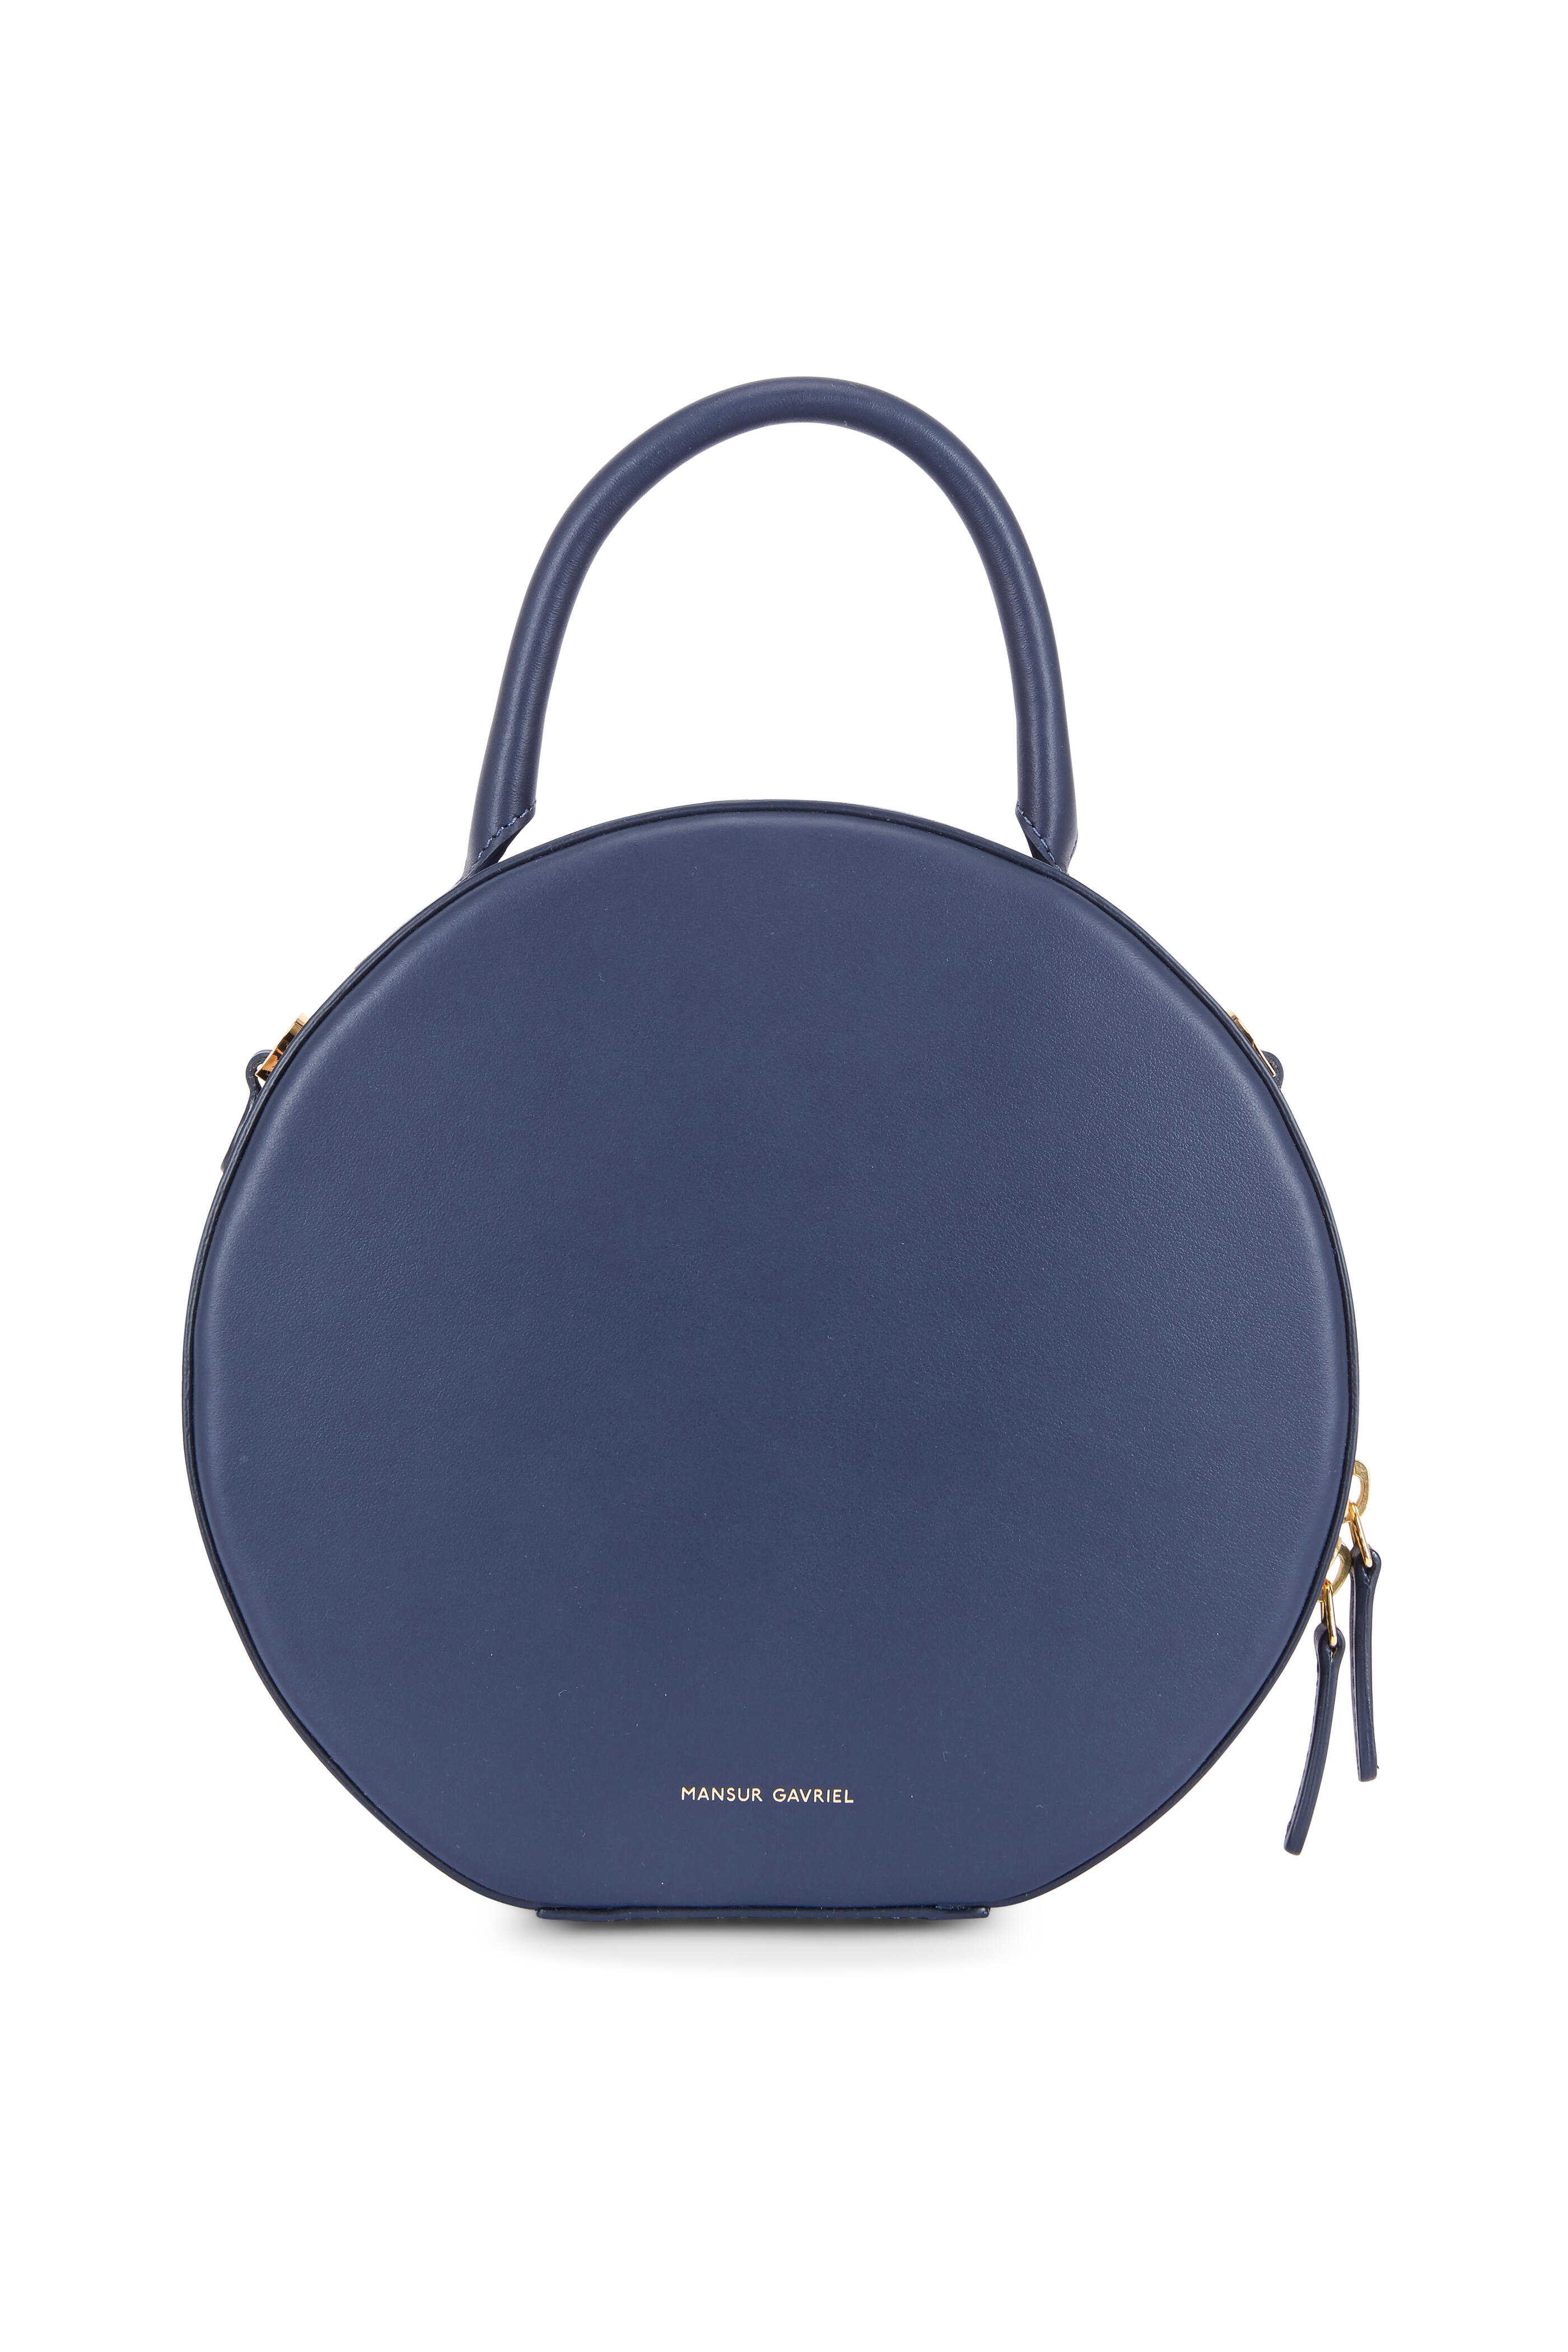 Mansur Gavriel Bucket Bag Royal Blue Leather Crossbody Bag